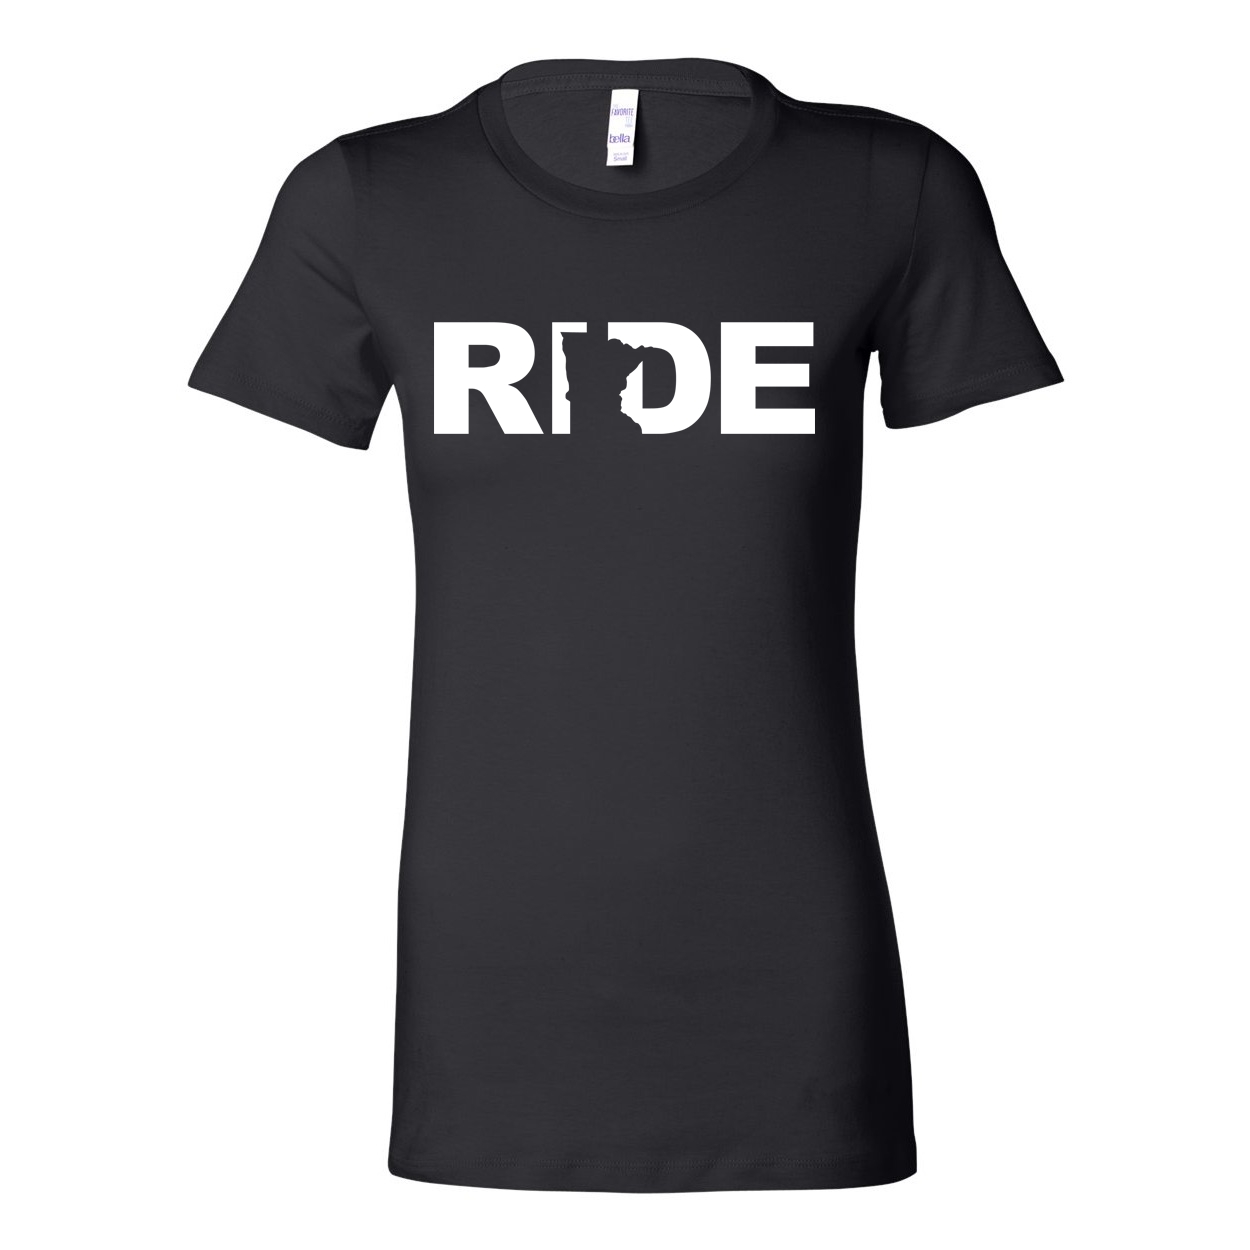 Ride Minnesota Classic Women's Fitted Tri-Blend T-Shirt Black